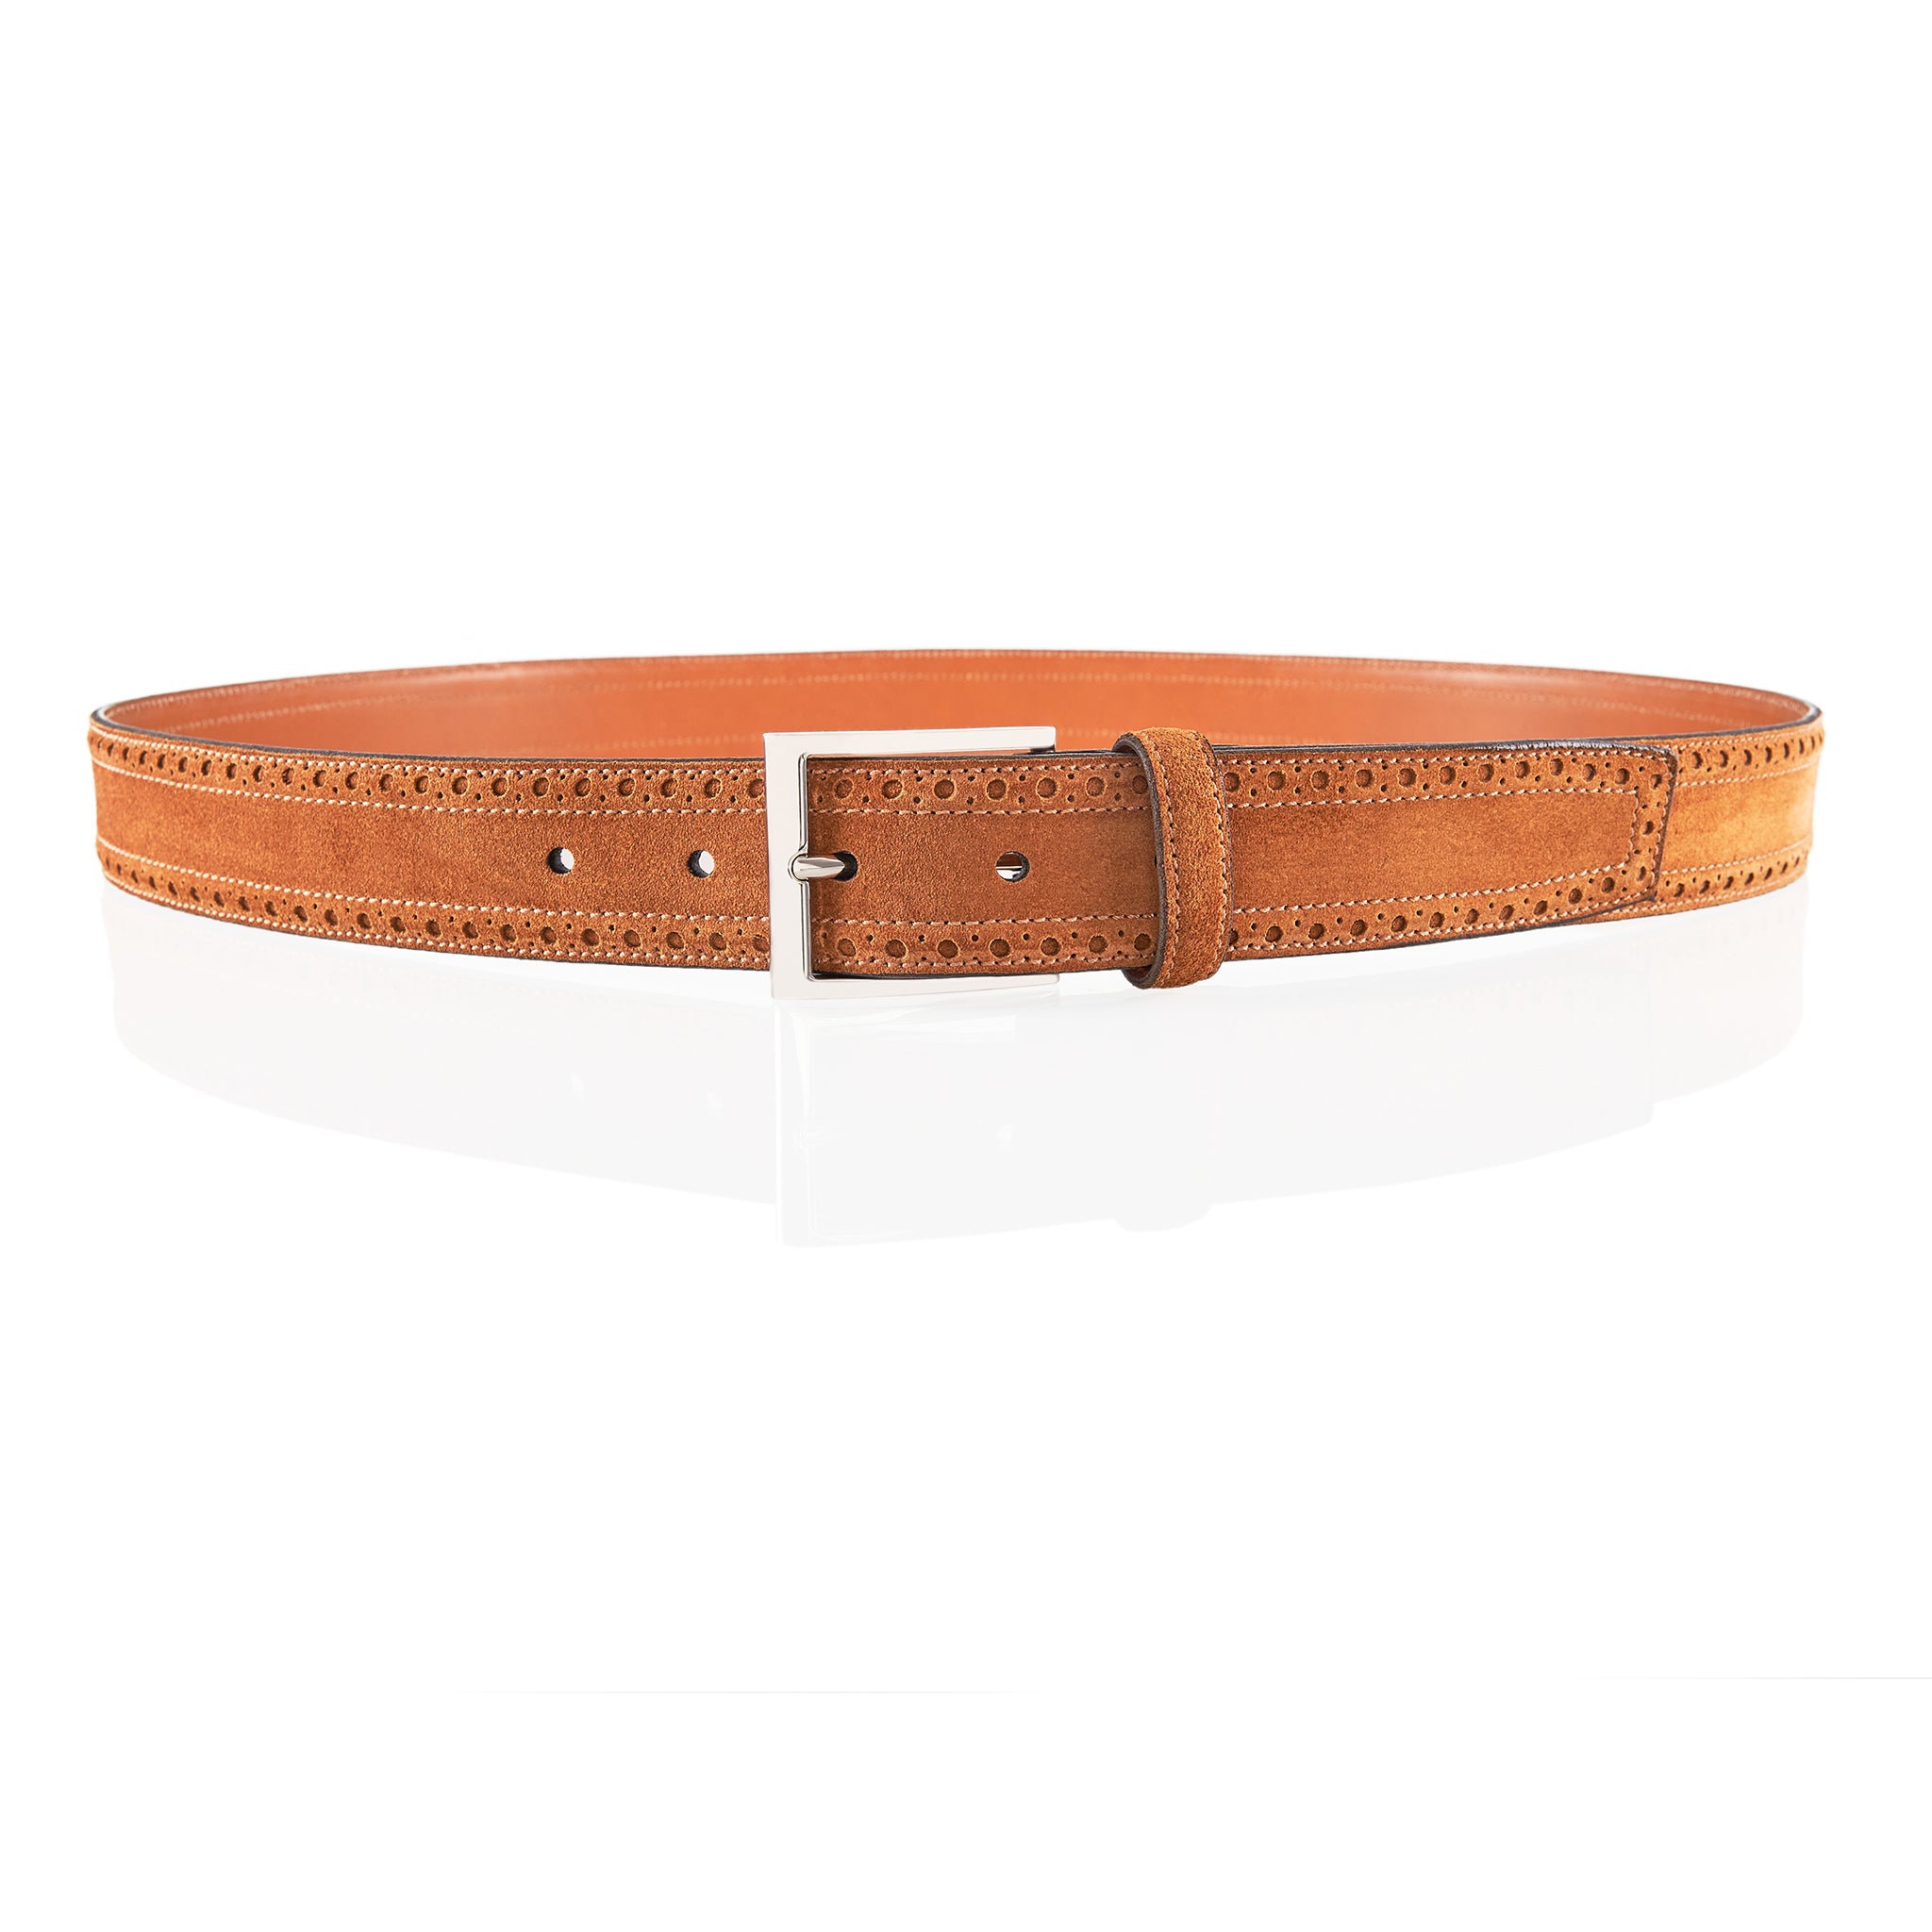 TLB Mallorca | Men's leather belts | Men's belt collection | 35mm ...